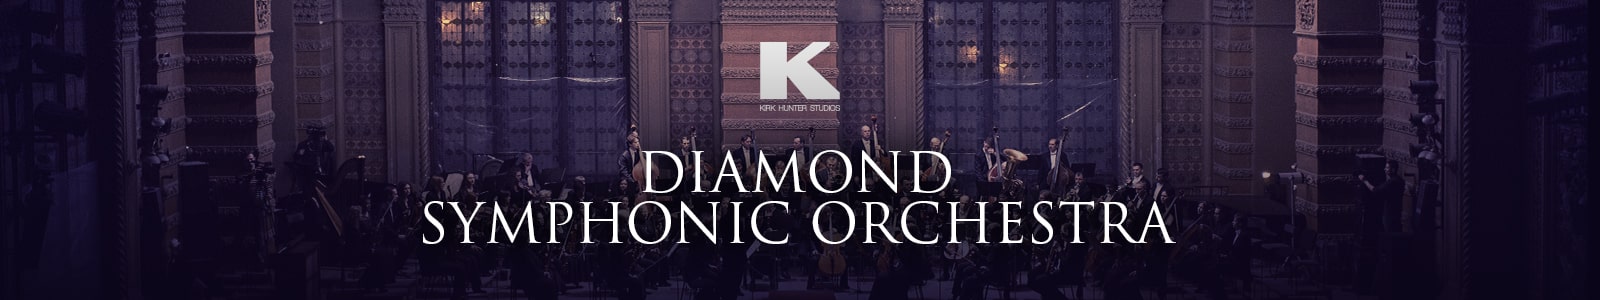 Diamond Symphonic Orchestra by Kirk Hunter Studios